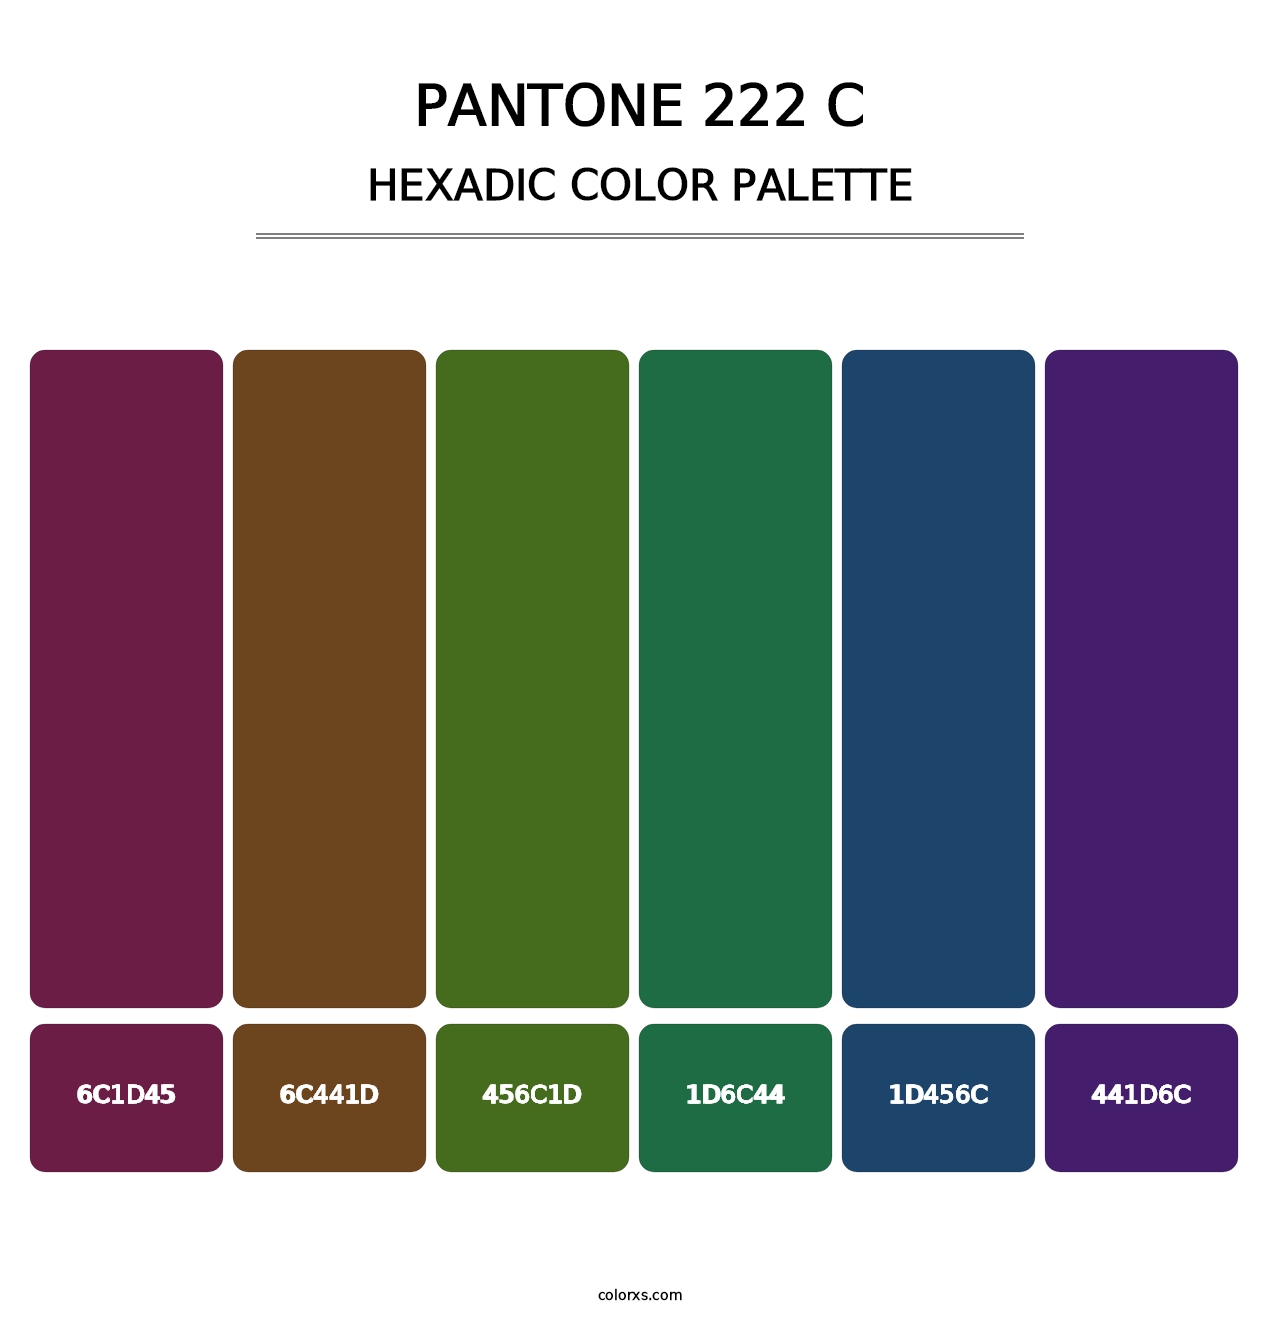 PANTONE 222 C - Hexadic Color Palette